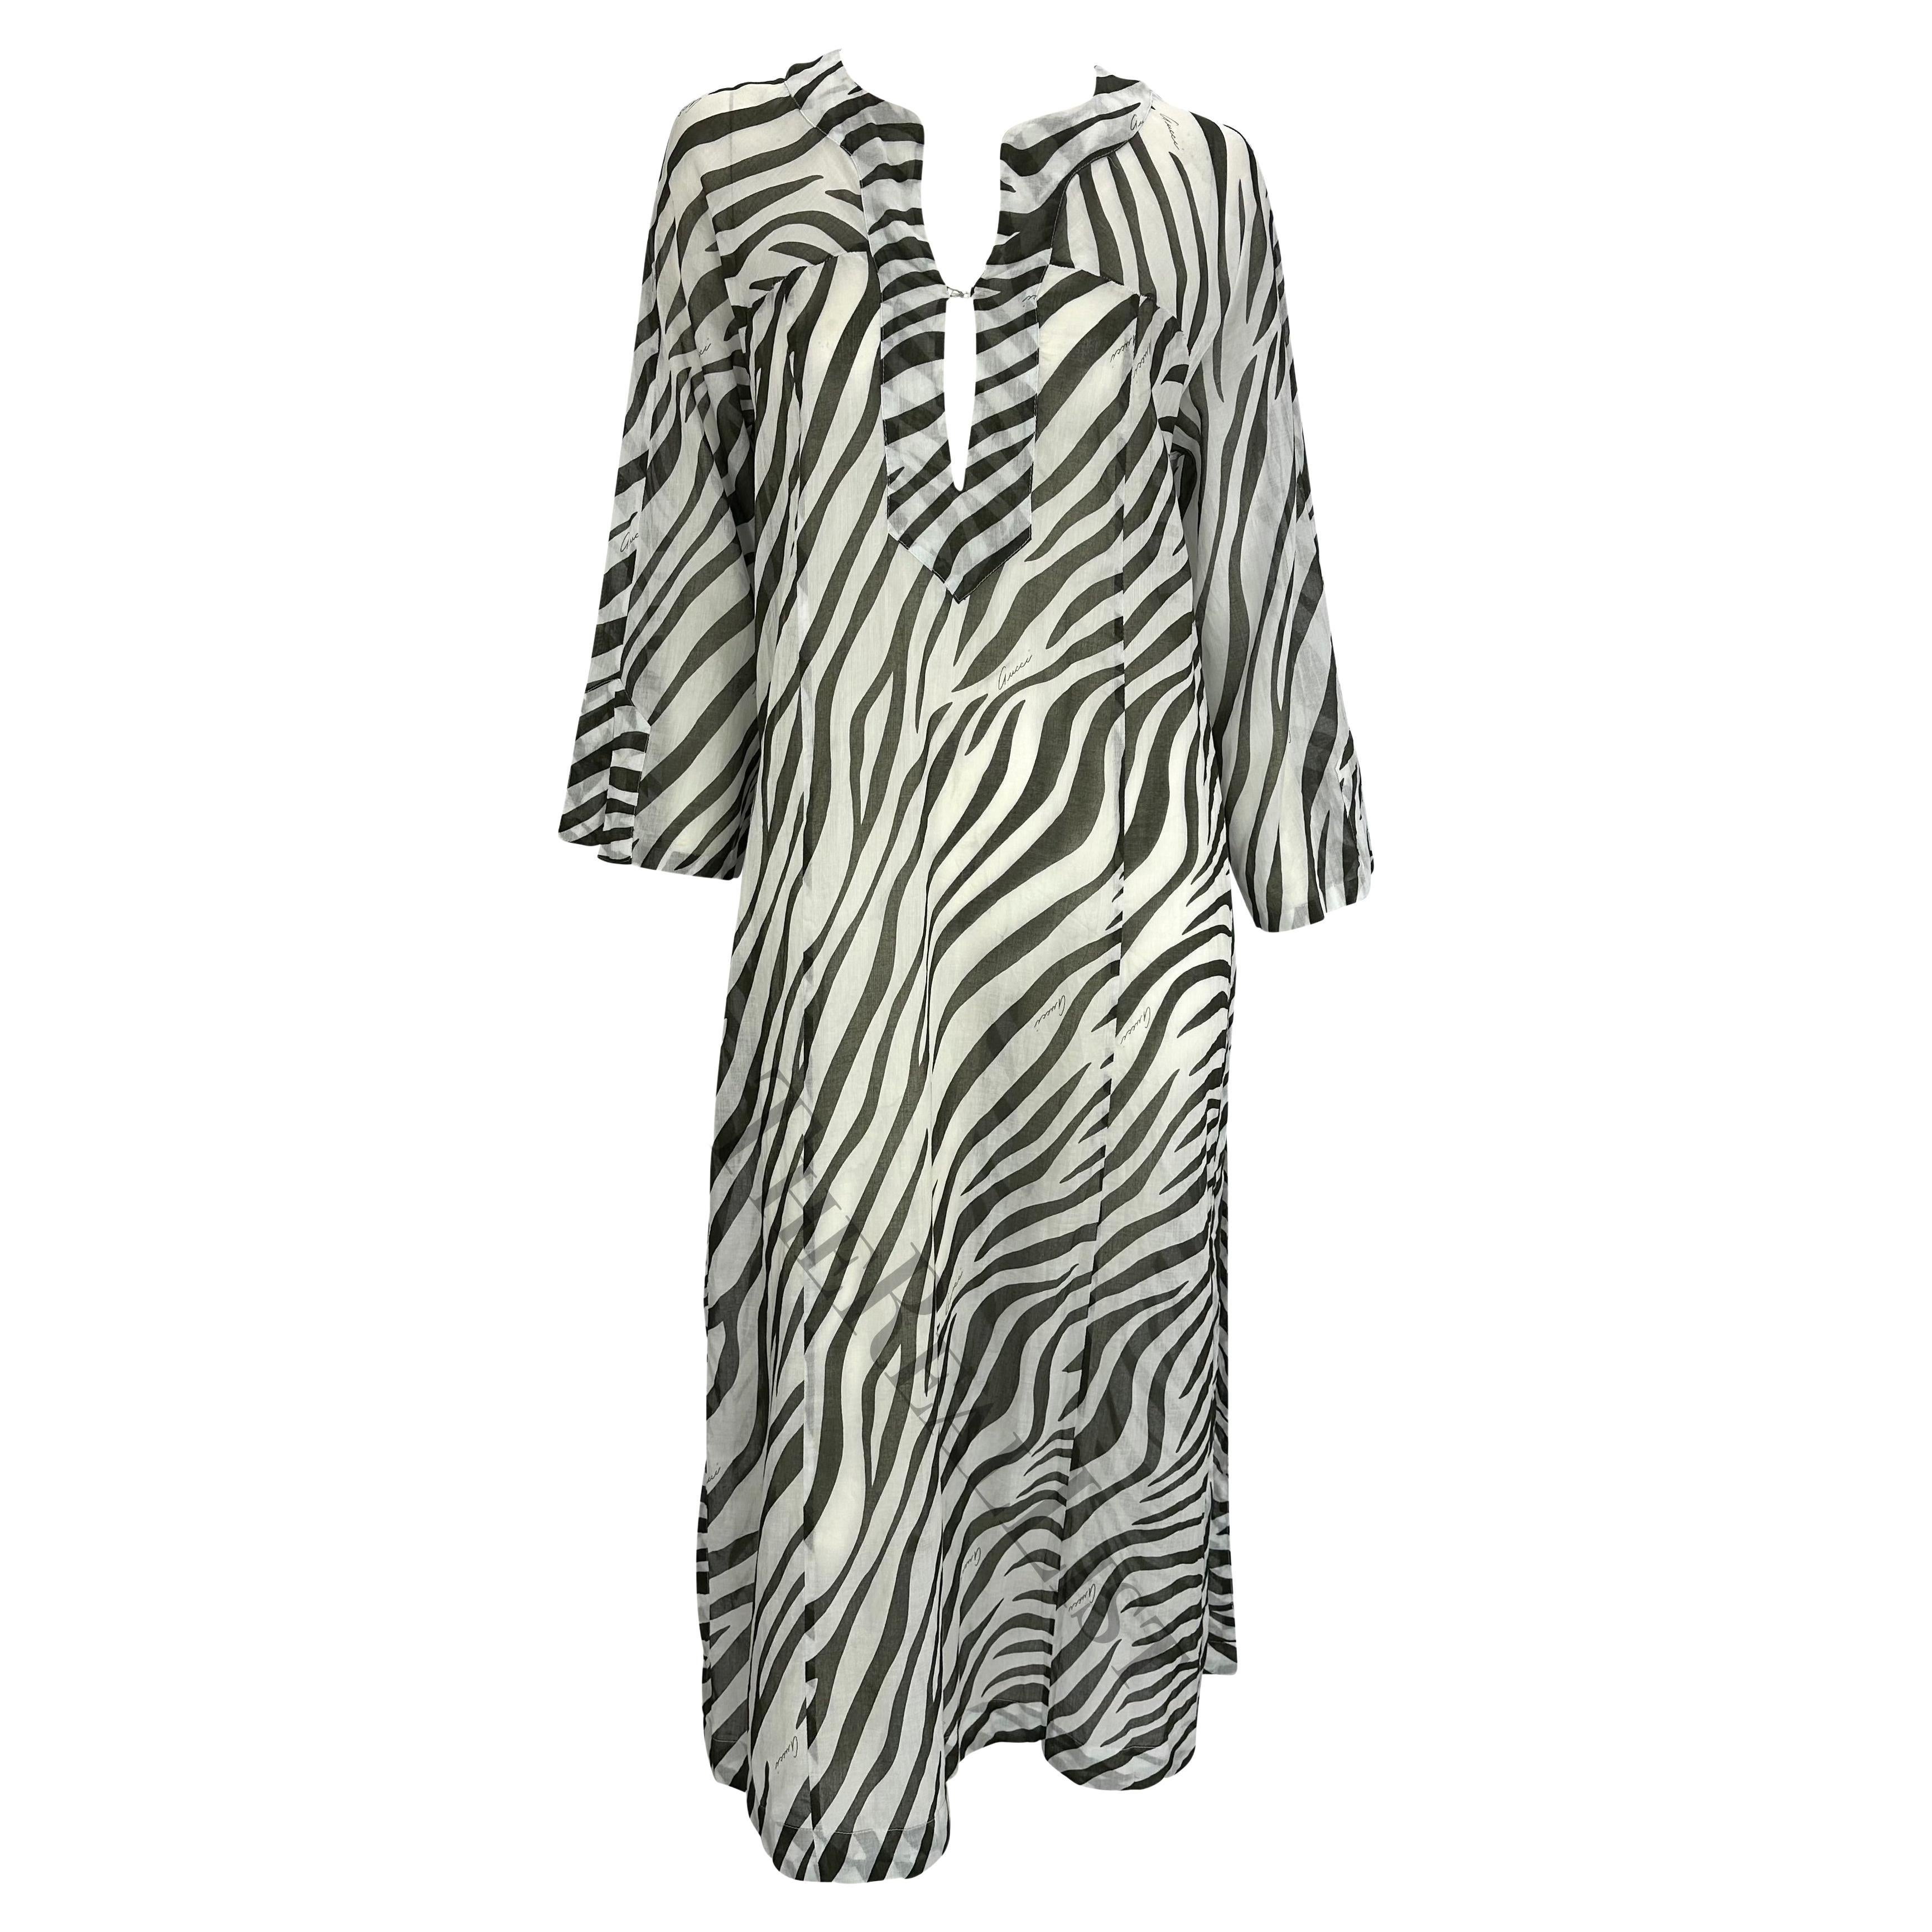 S/S 1996 Gucci by Tom Ford Runway Black White Zebra Print Sheer Kaftan Dress For Sale